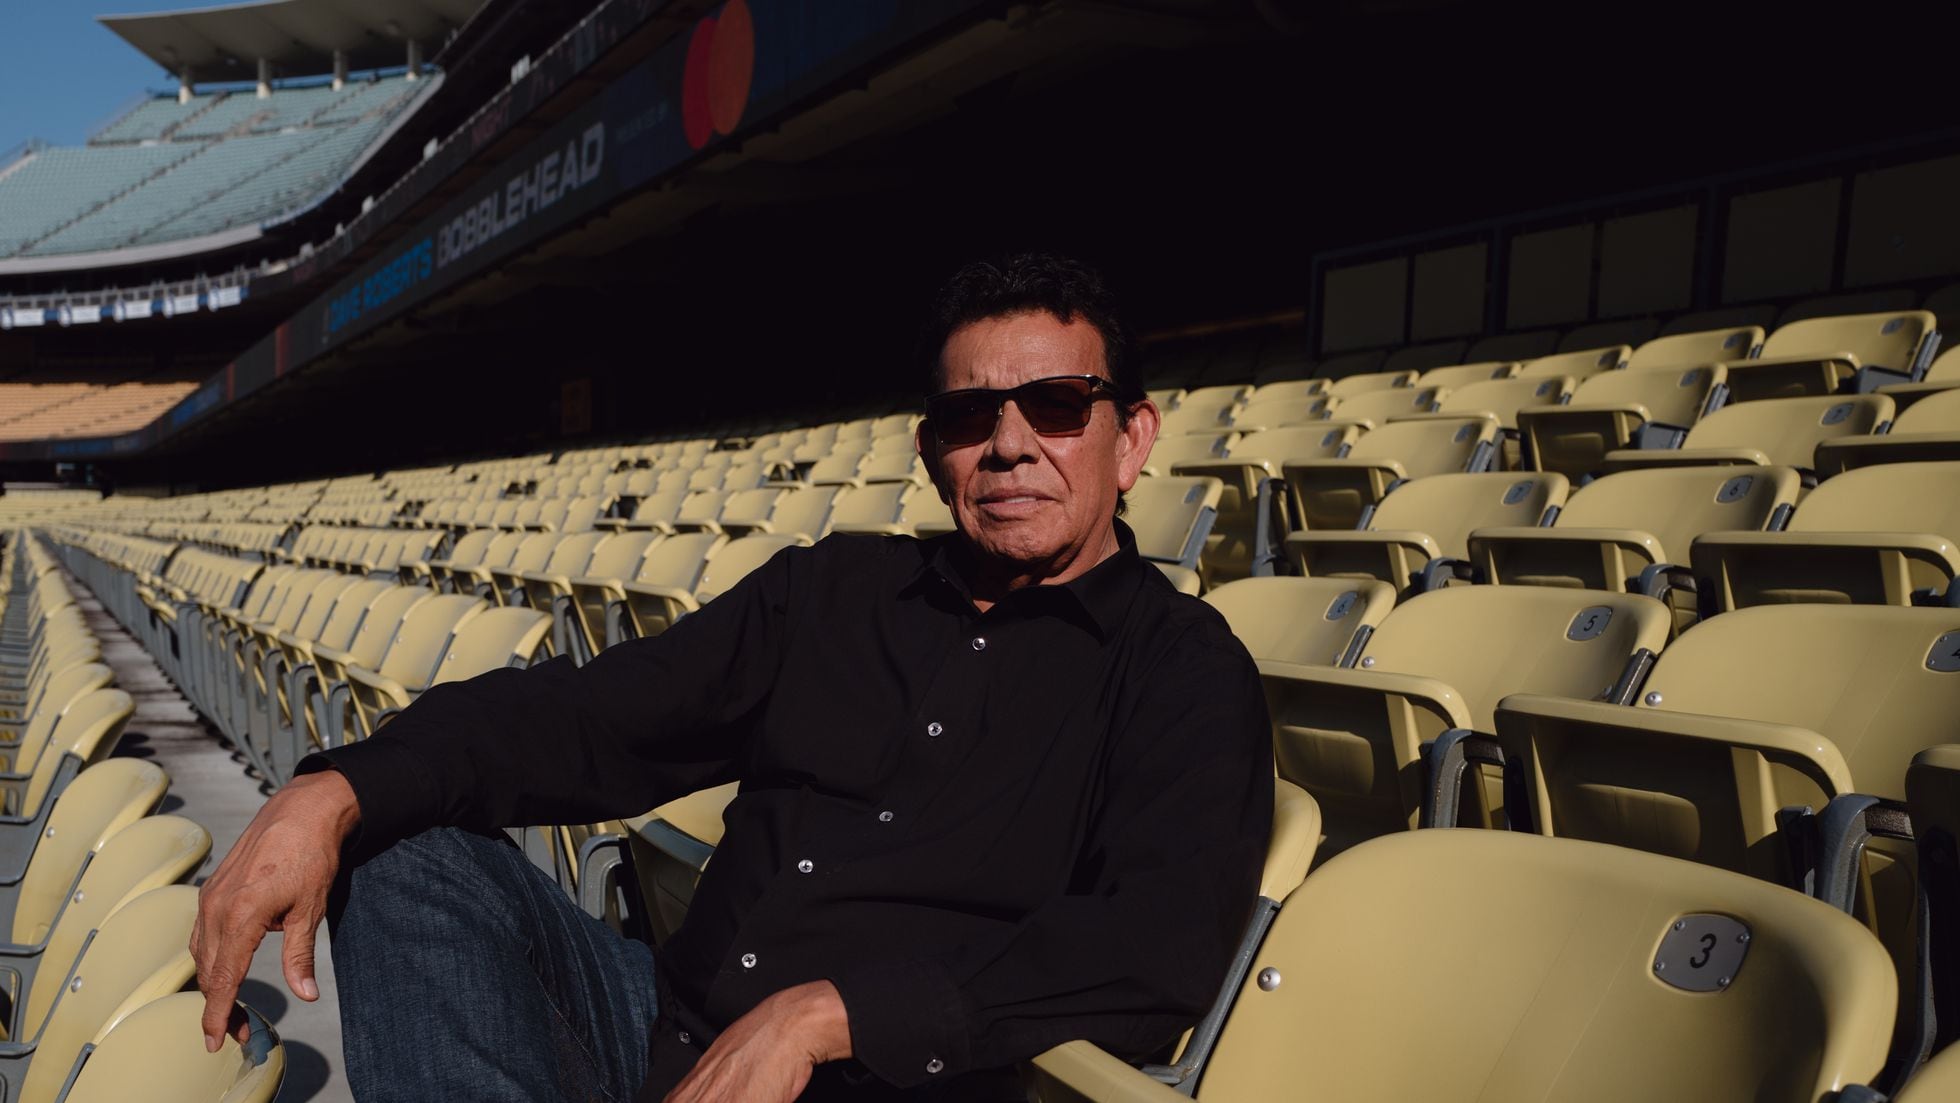 Hispanic Heritage Month at Dodger Stadium begins with Valenzuela